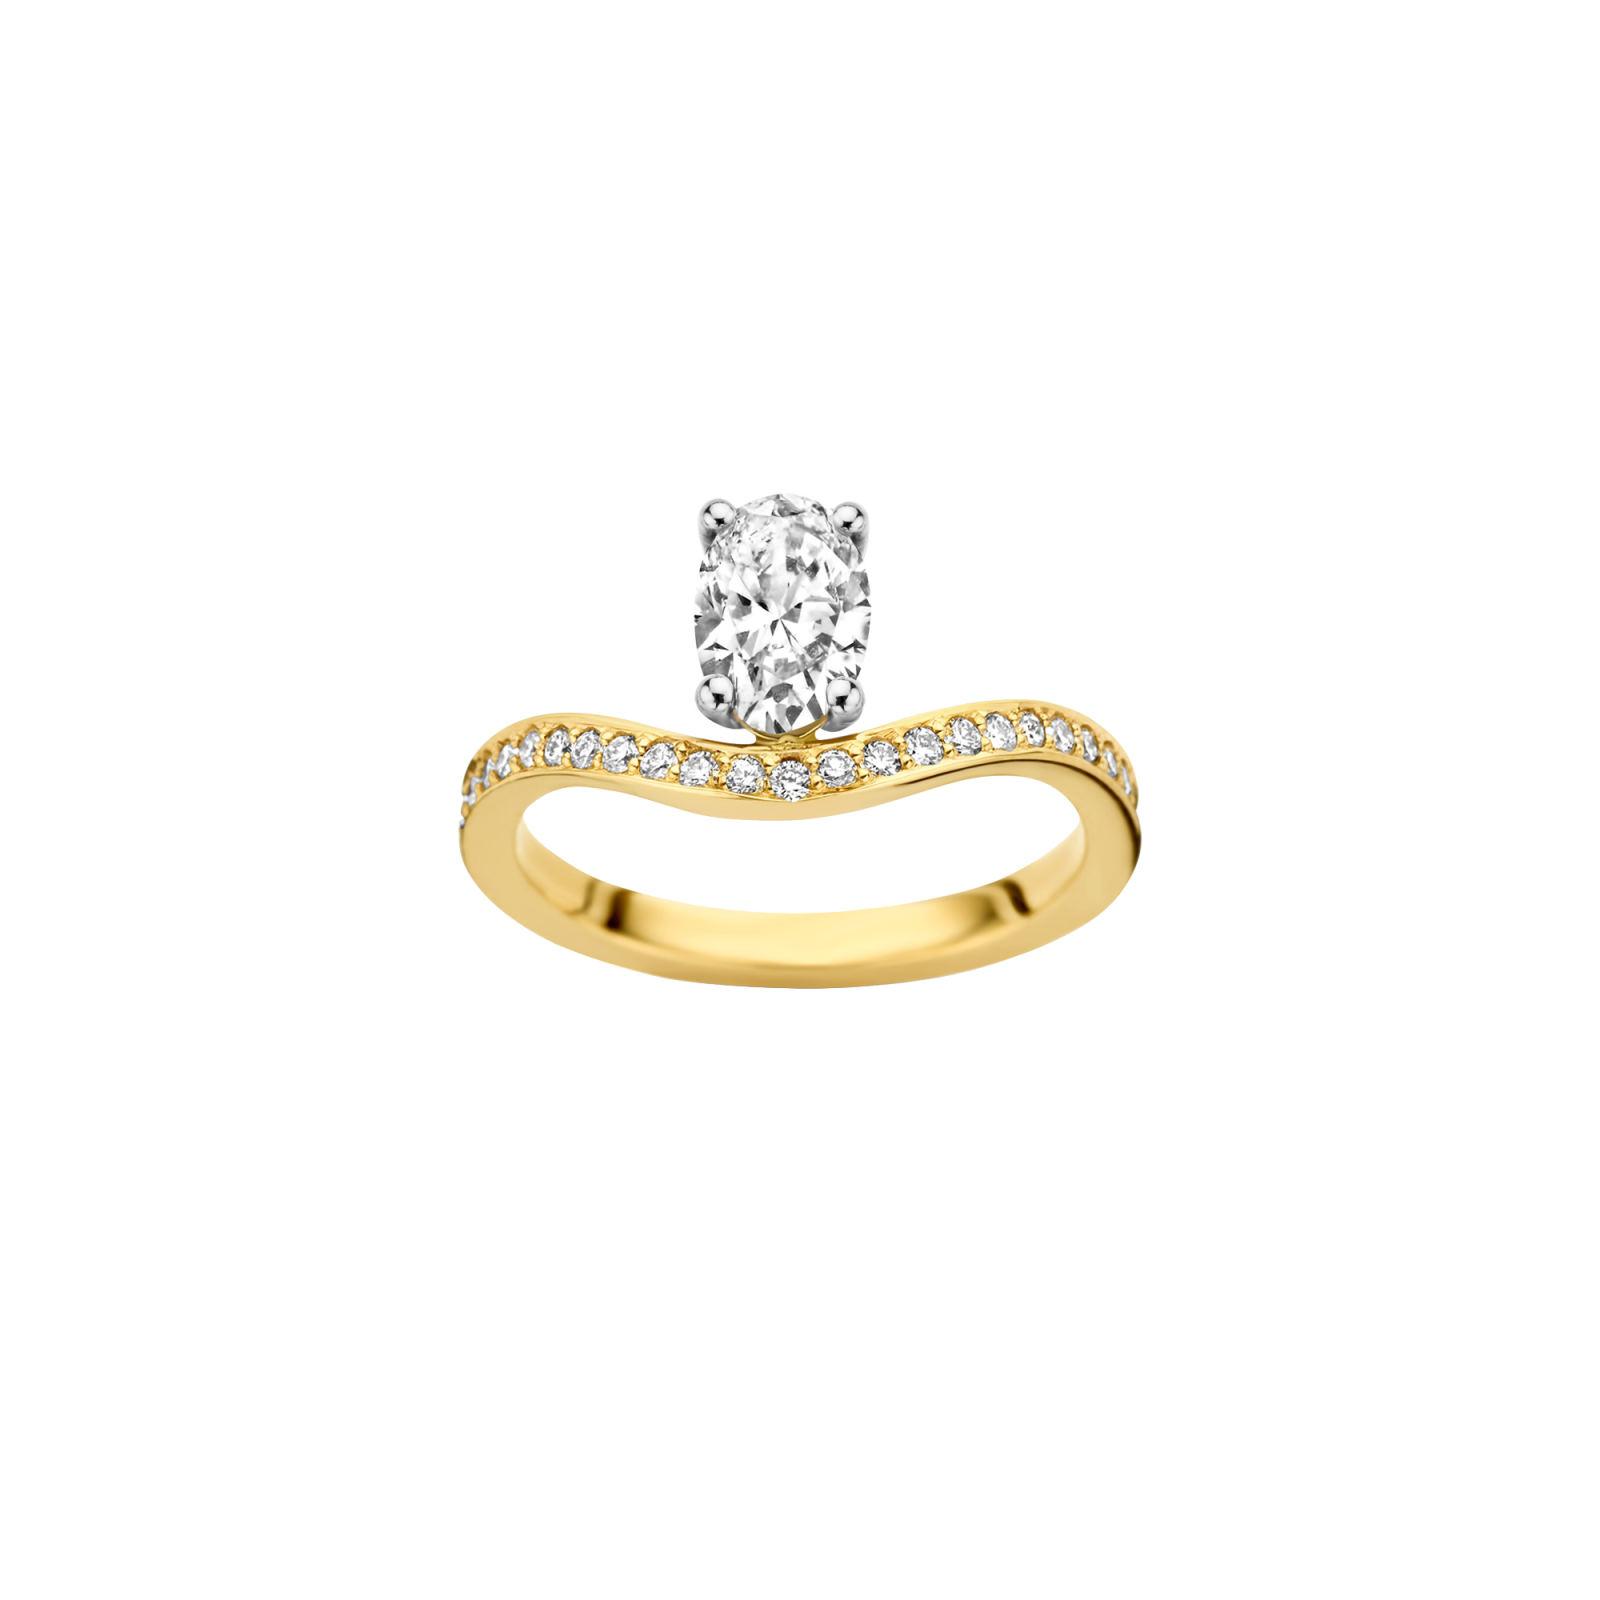 Helena engagement ring packshot - yellow gold